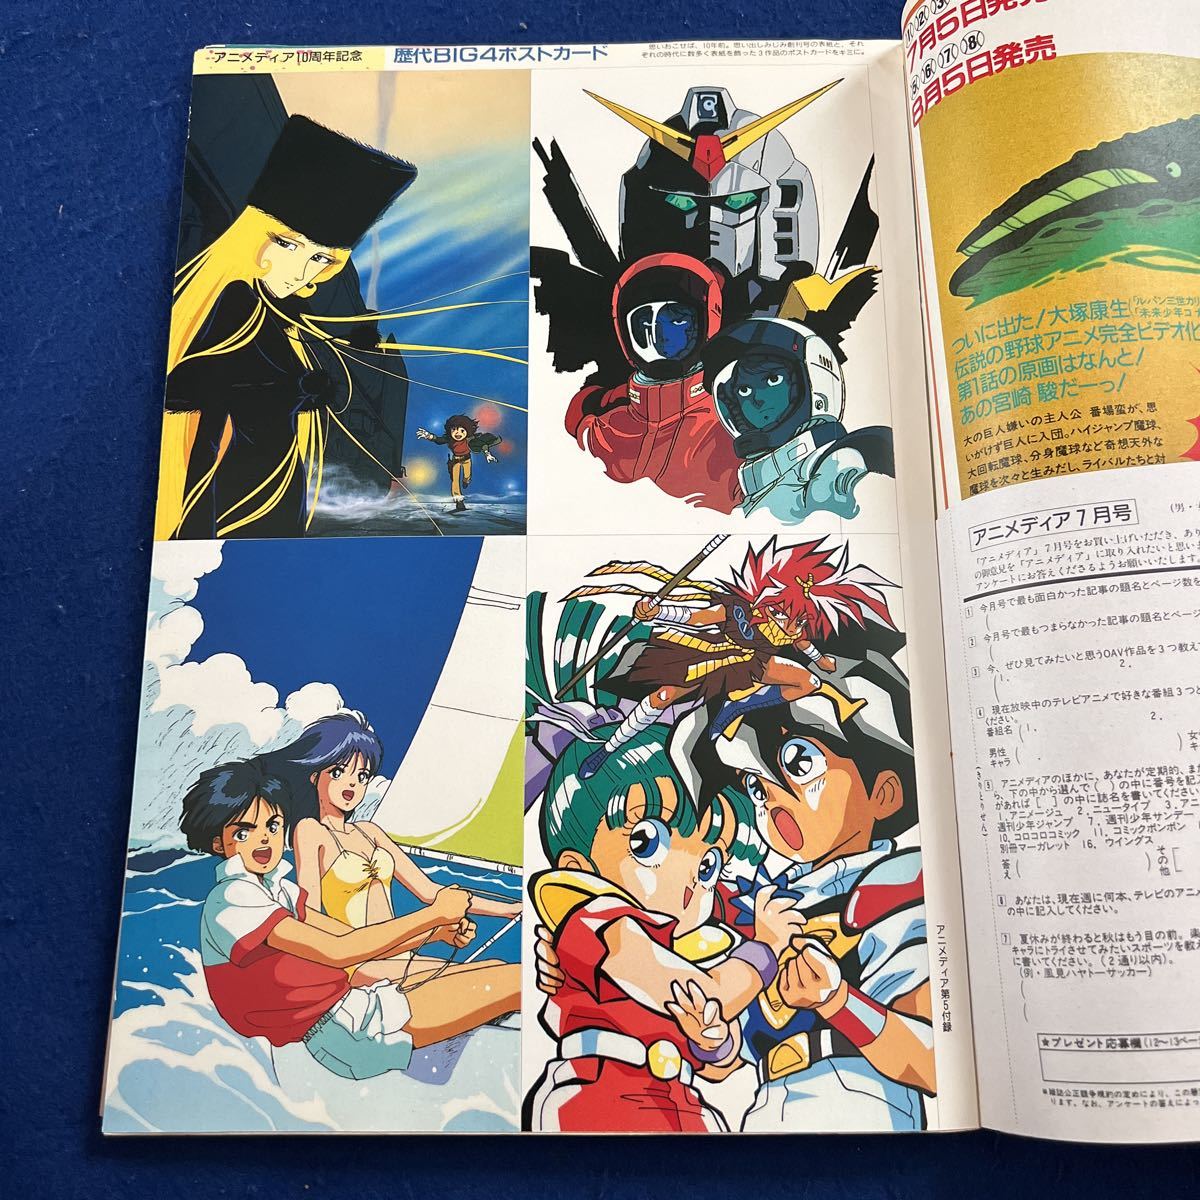  Animedia *1991 year 7 month number *..10 anniversary commemoration extra-large number * Yasuhiko Yoshikazu * takada Akira beautiful *AD futoshi flat chronicle * Dragon Ball Z